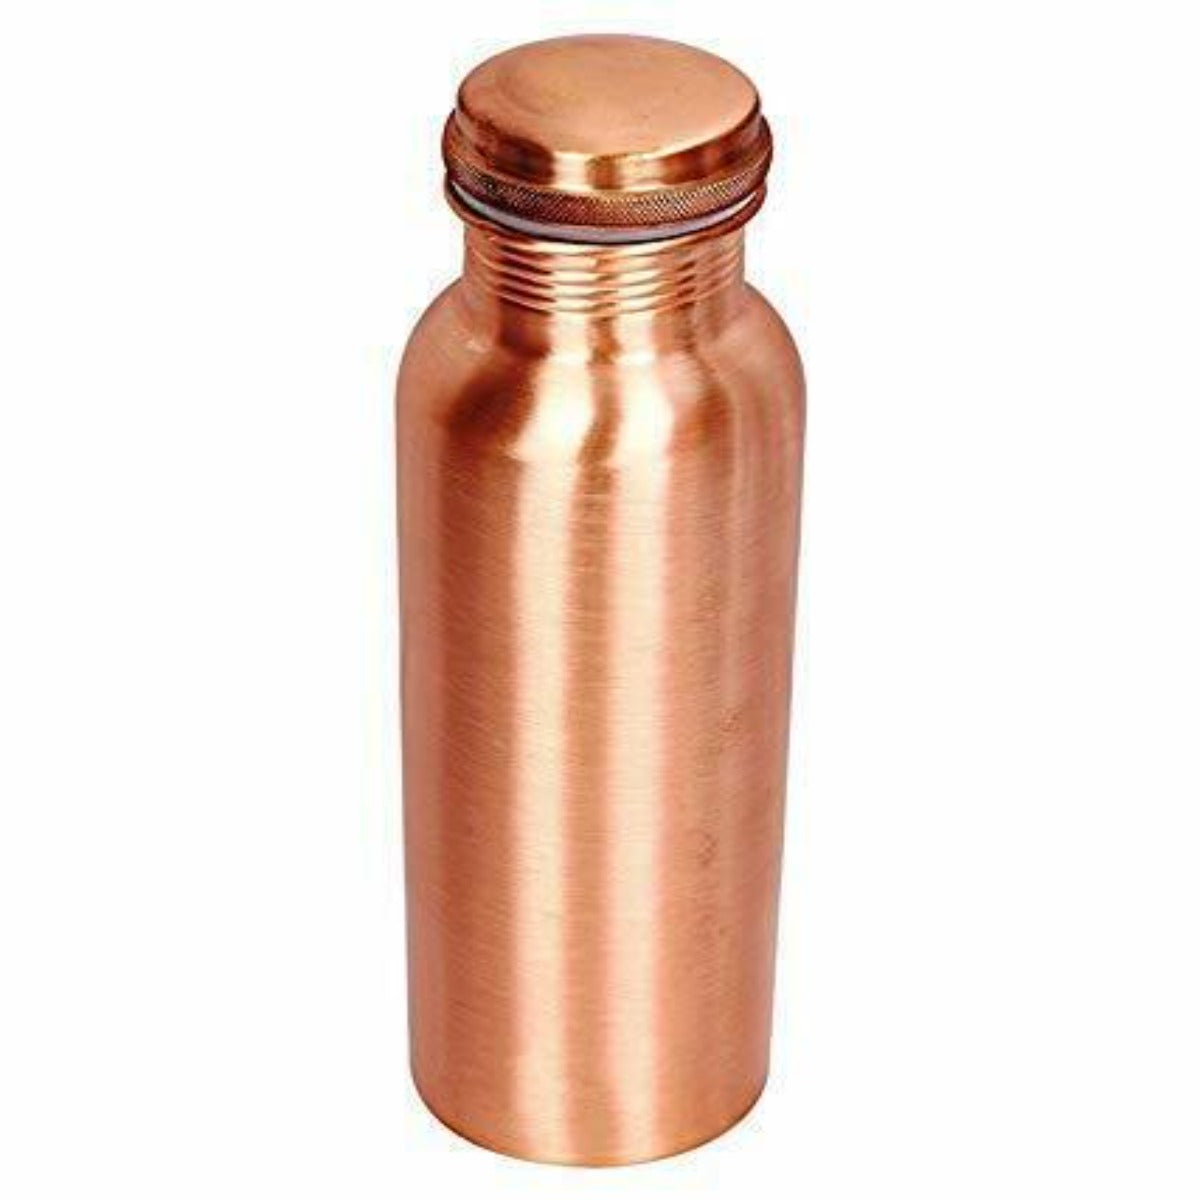 100% Pure Copper Water Bottle For Yoga Ayurveda Health Benefits 950 ml FreeShip 